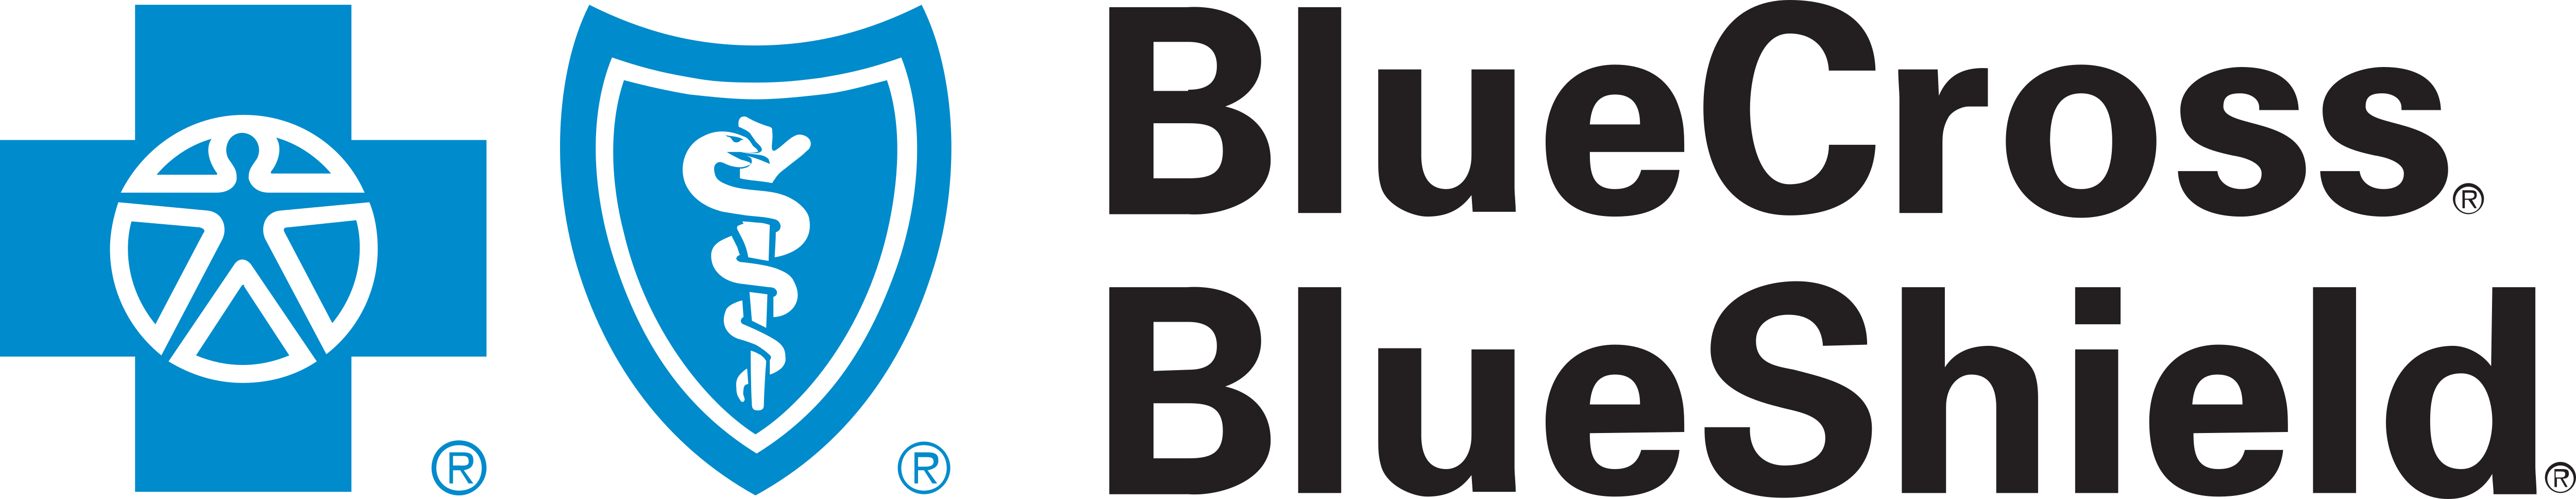 Blue Cross Blue Shield Logos Download